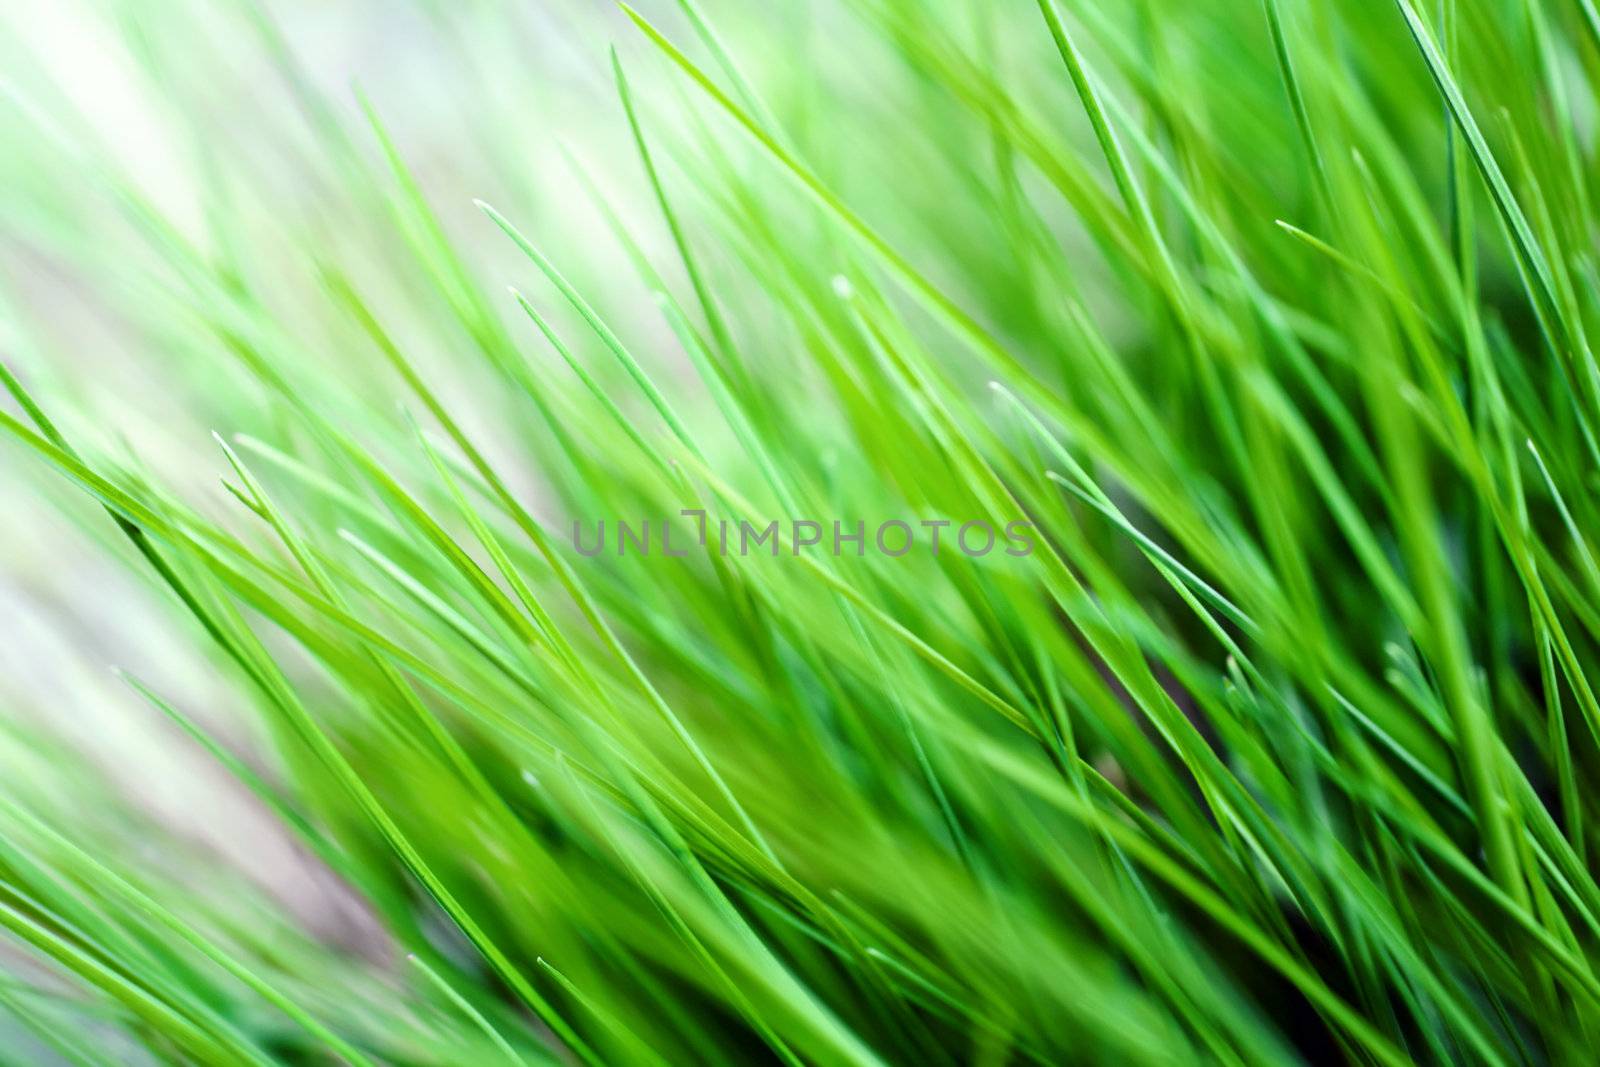 An image of lush green grass close-up